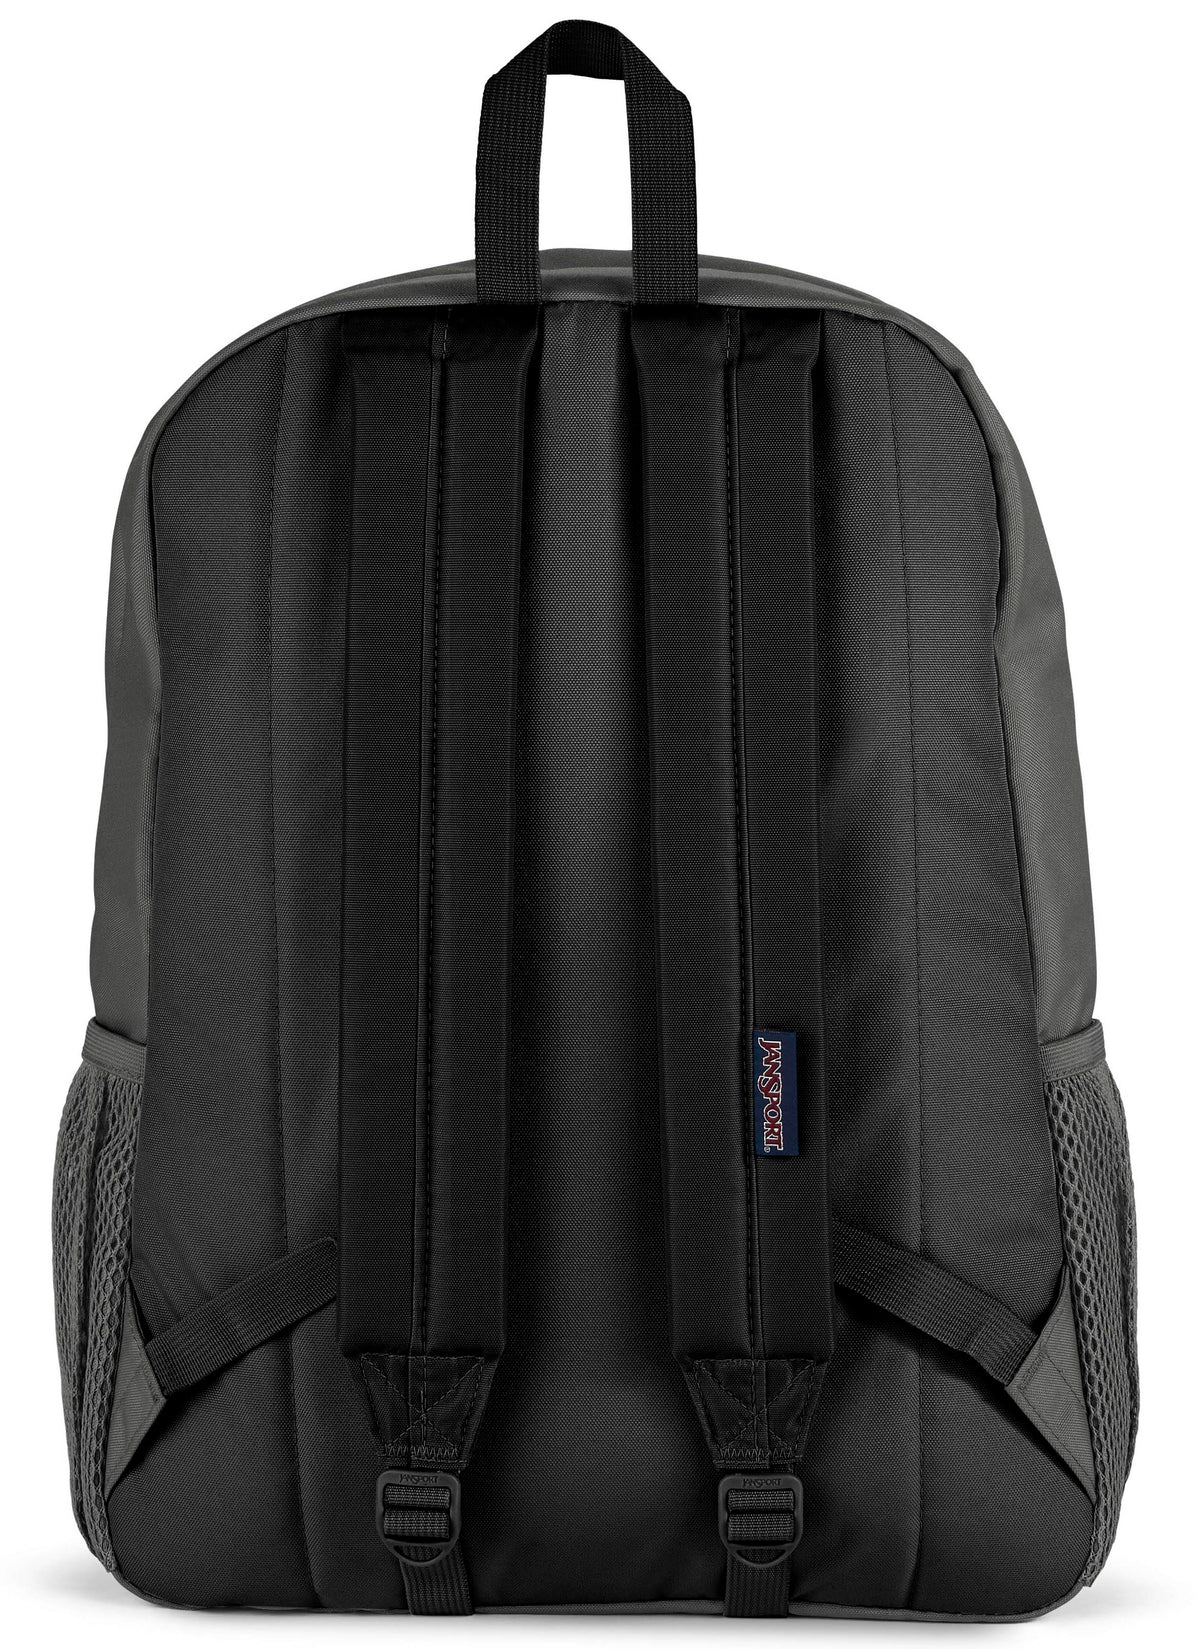 Jansport Union Pack Backpack - Graphite Grey